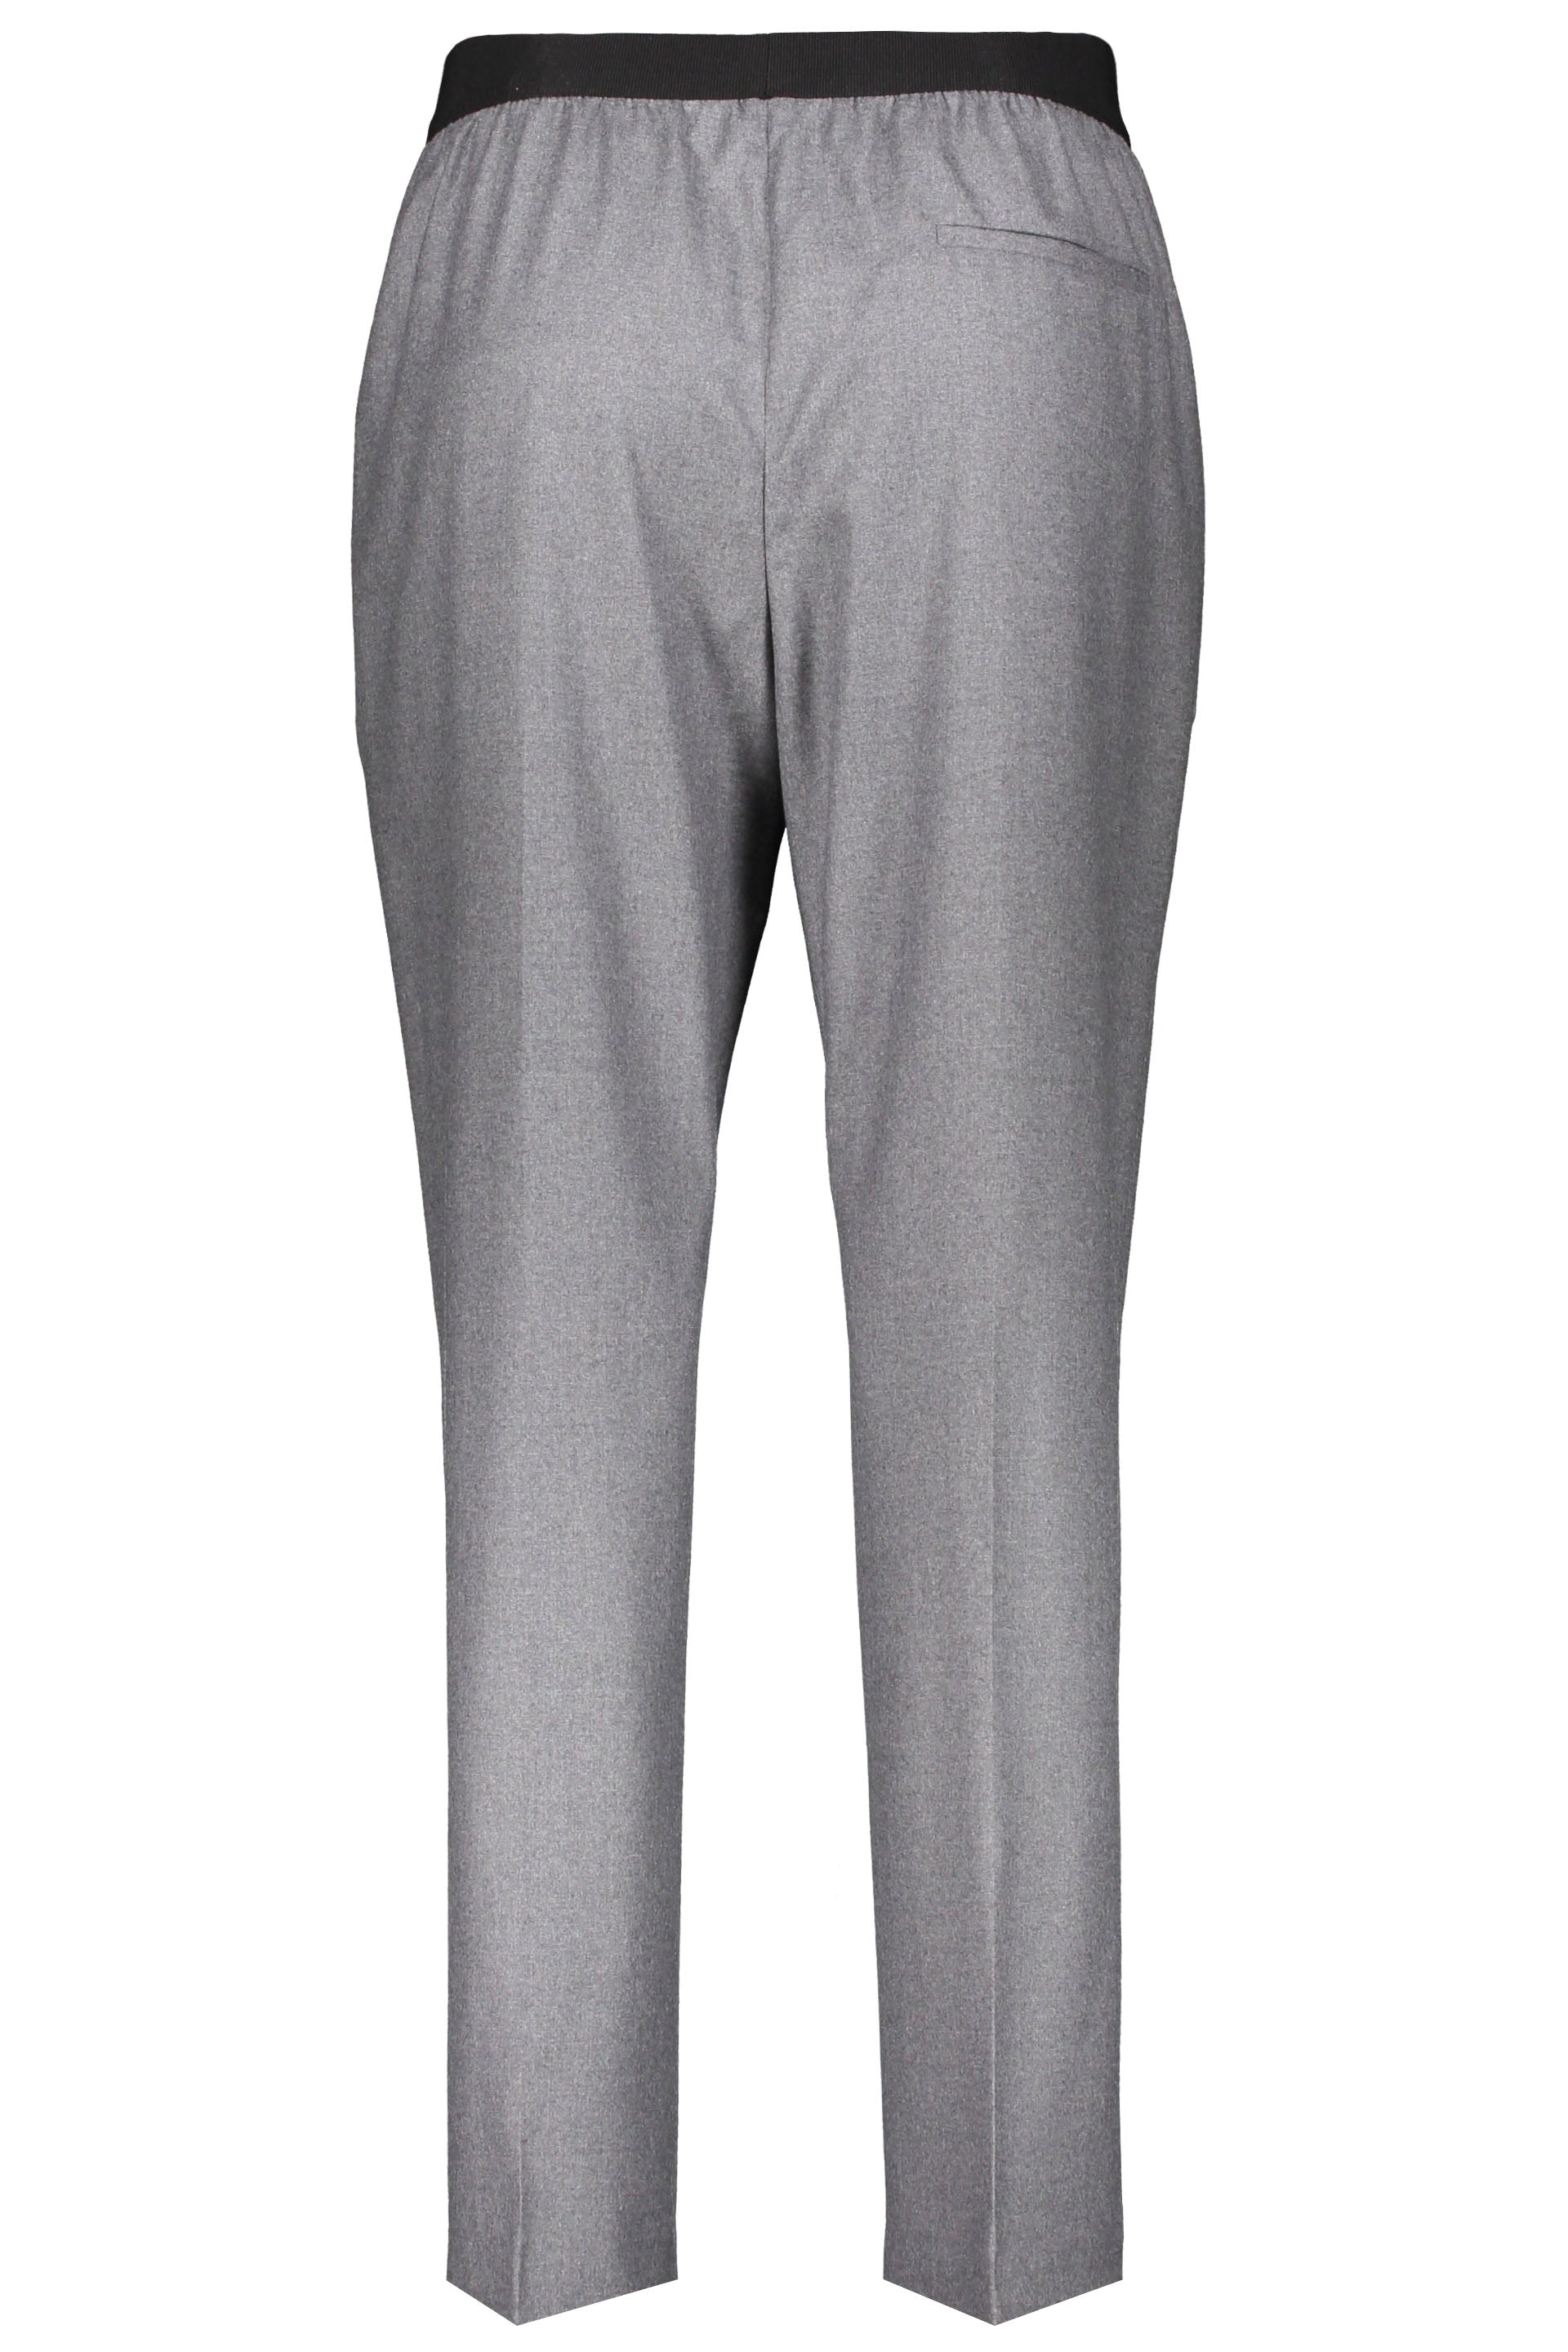 Agnona-OUTLET-SALE-Wool-trousers-Hosen-ARCHIVE-COLLECTION-2_85427fef-bae9-4c60-9424-e226f46b611a.jpg